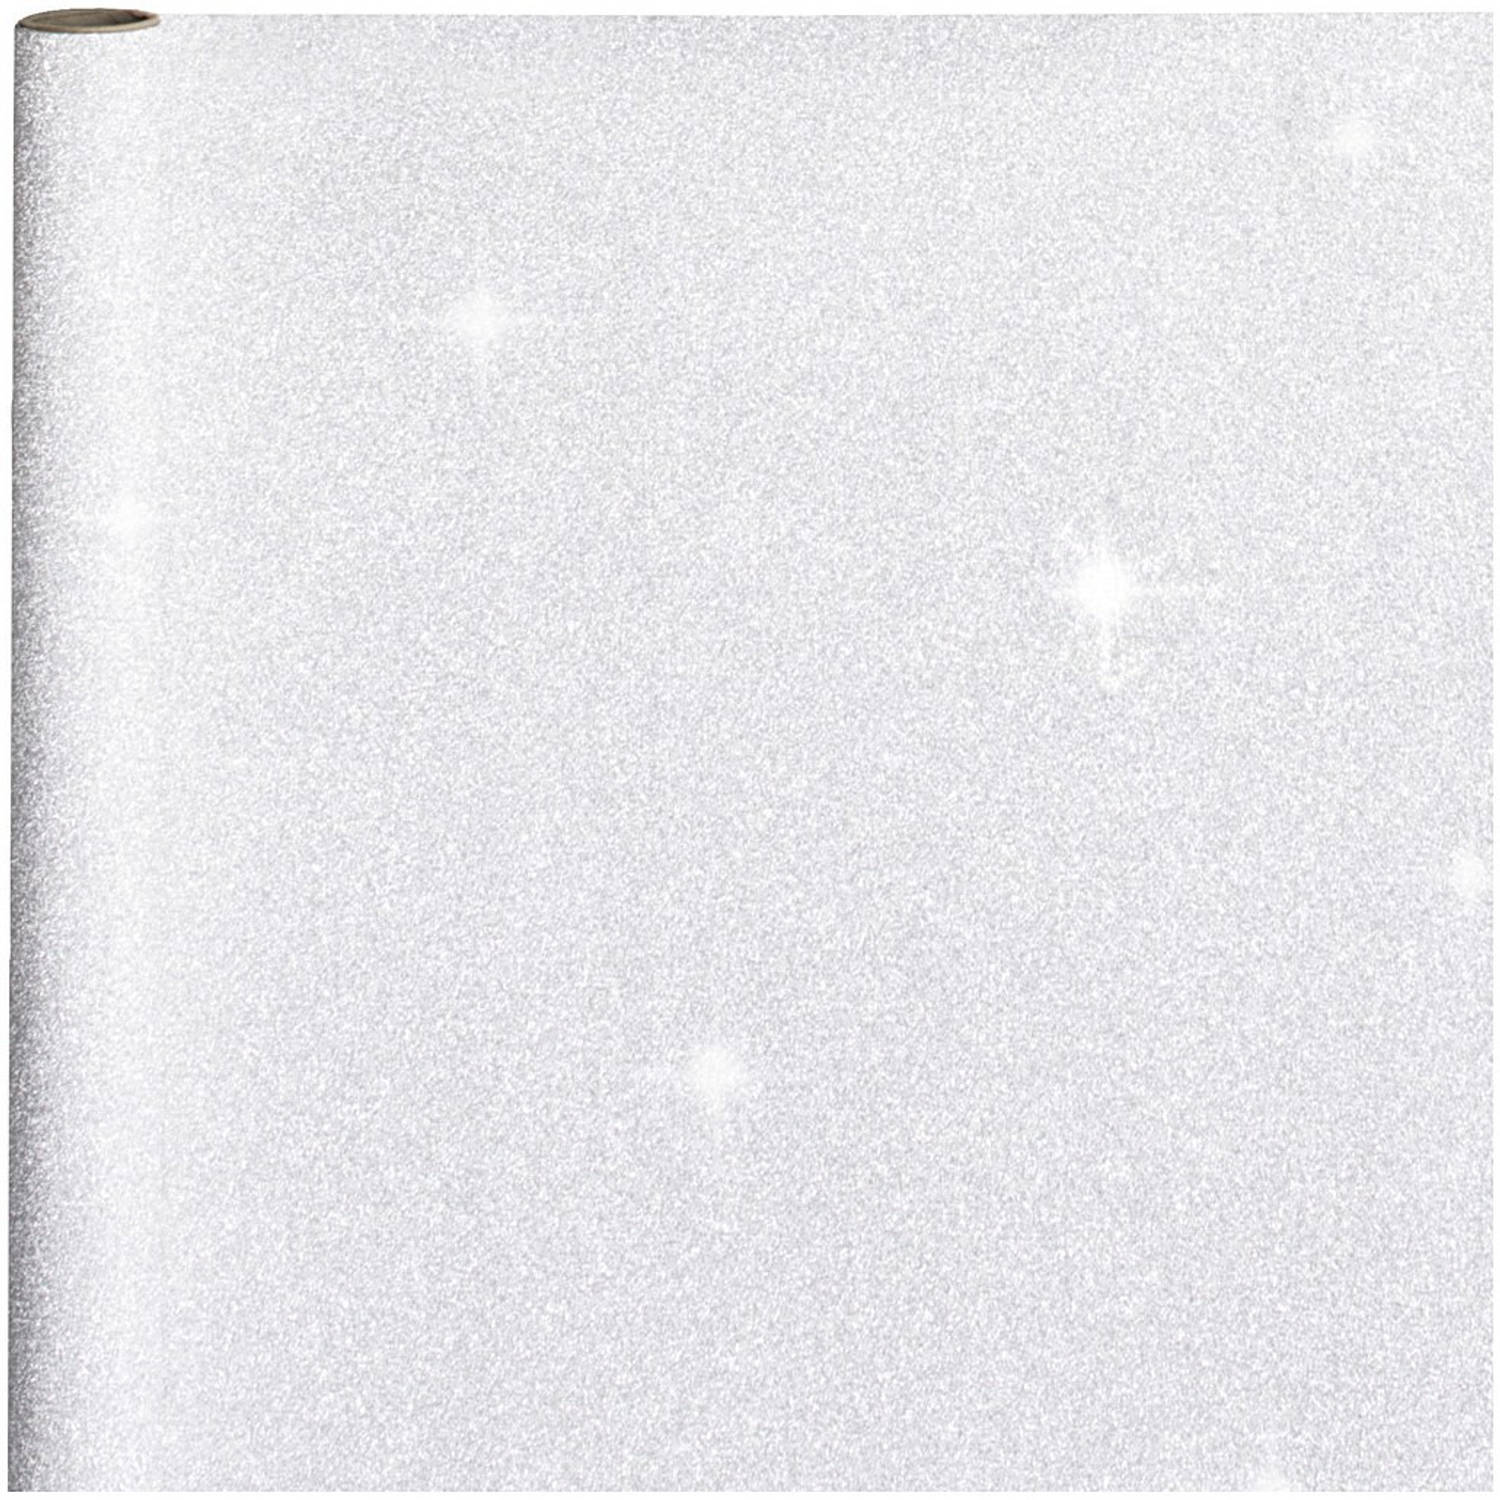 Identiteit Briesje Guinness Cadeaupapier/inpakpapier zilver met glitters 300 x 50 cm - Cadeaupapier |  Blokker